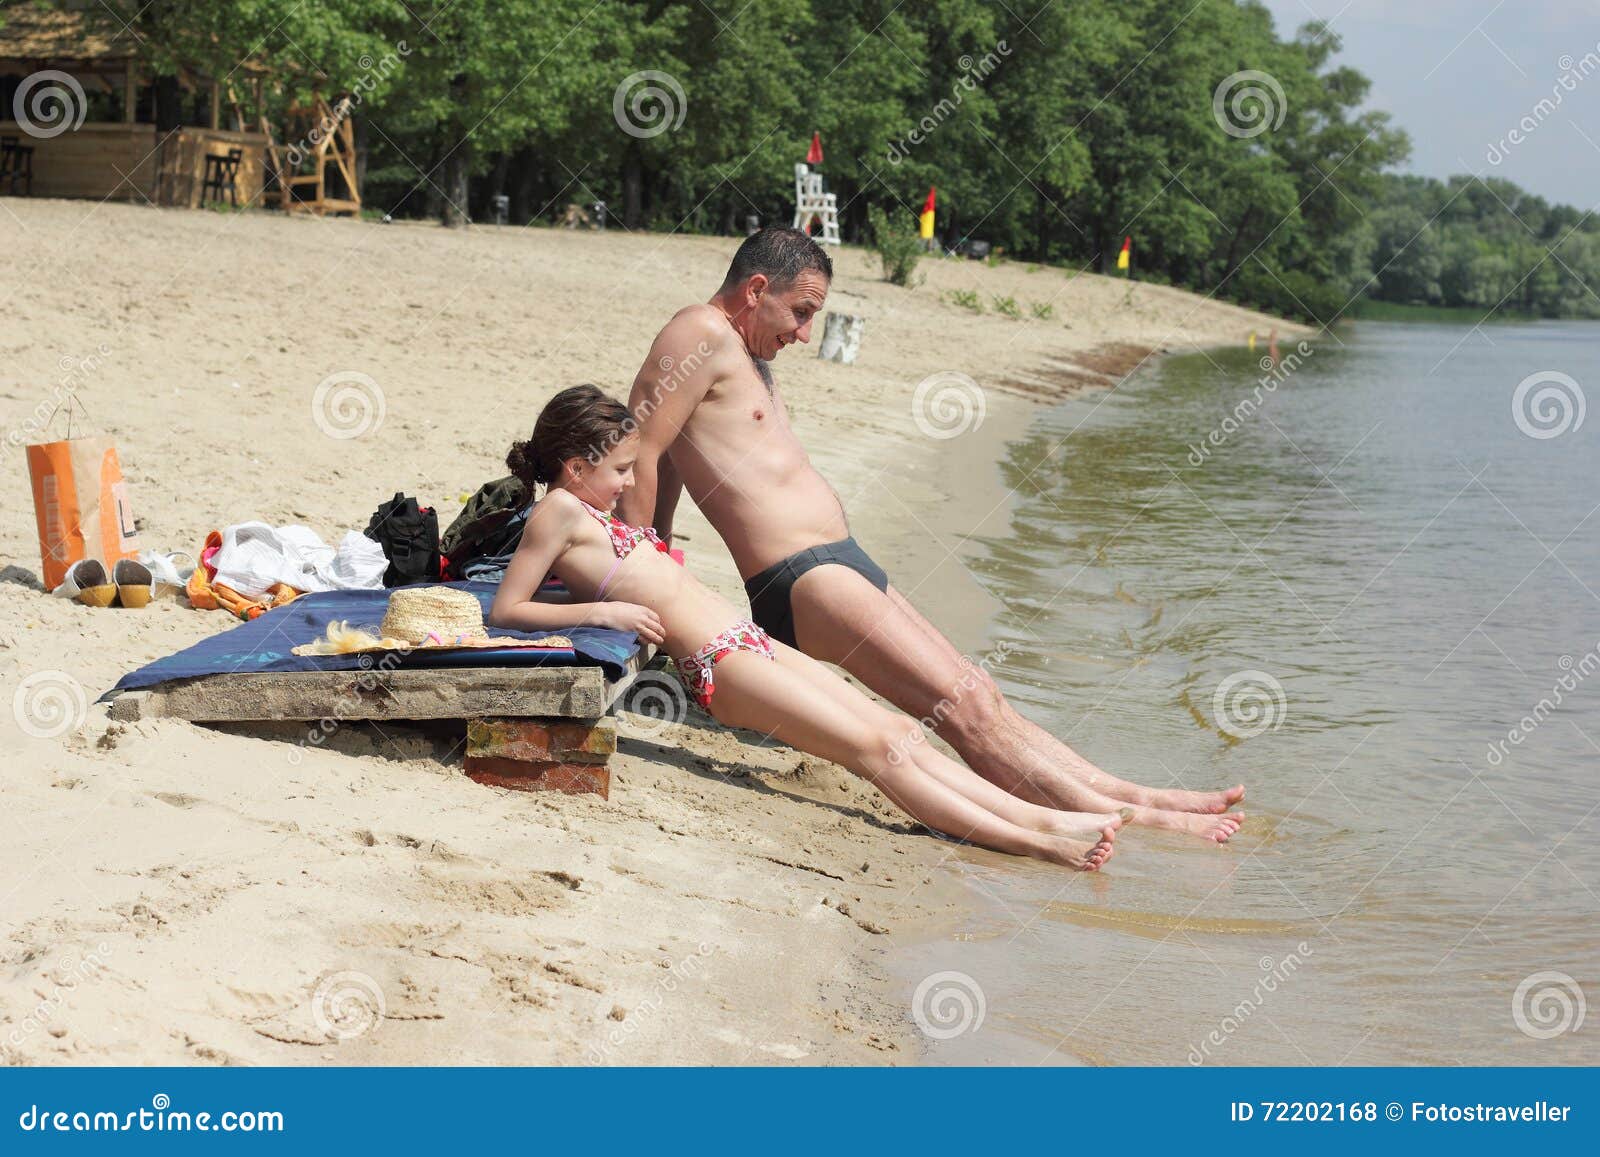 danny kovac share father and daughter nude photos photos